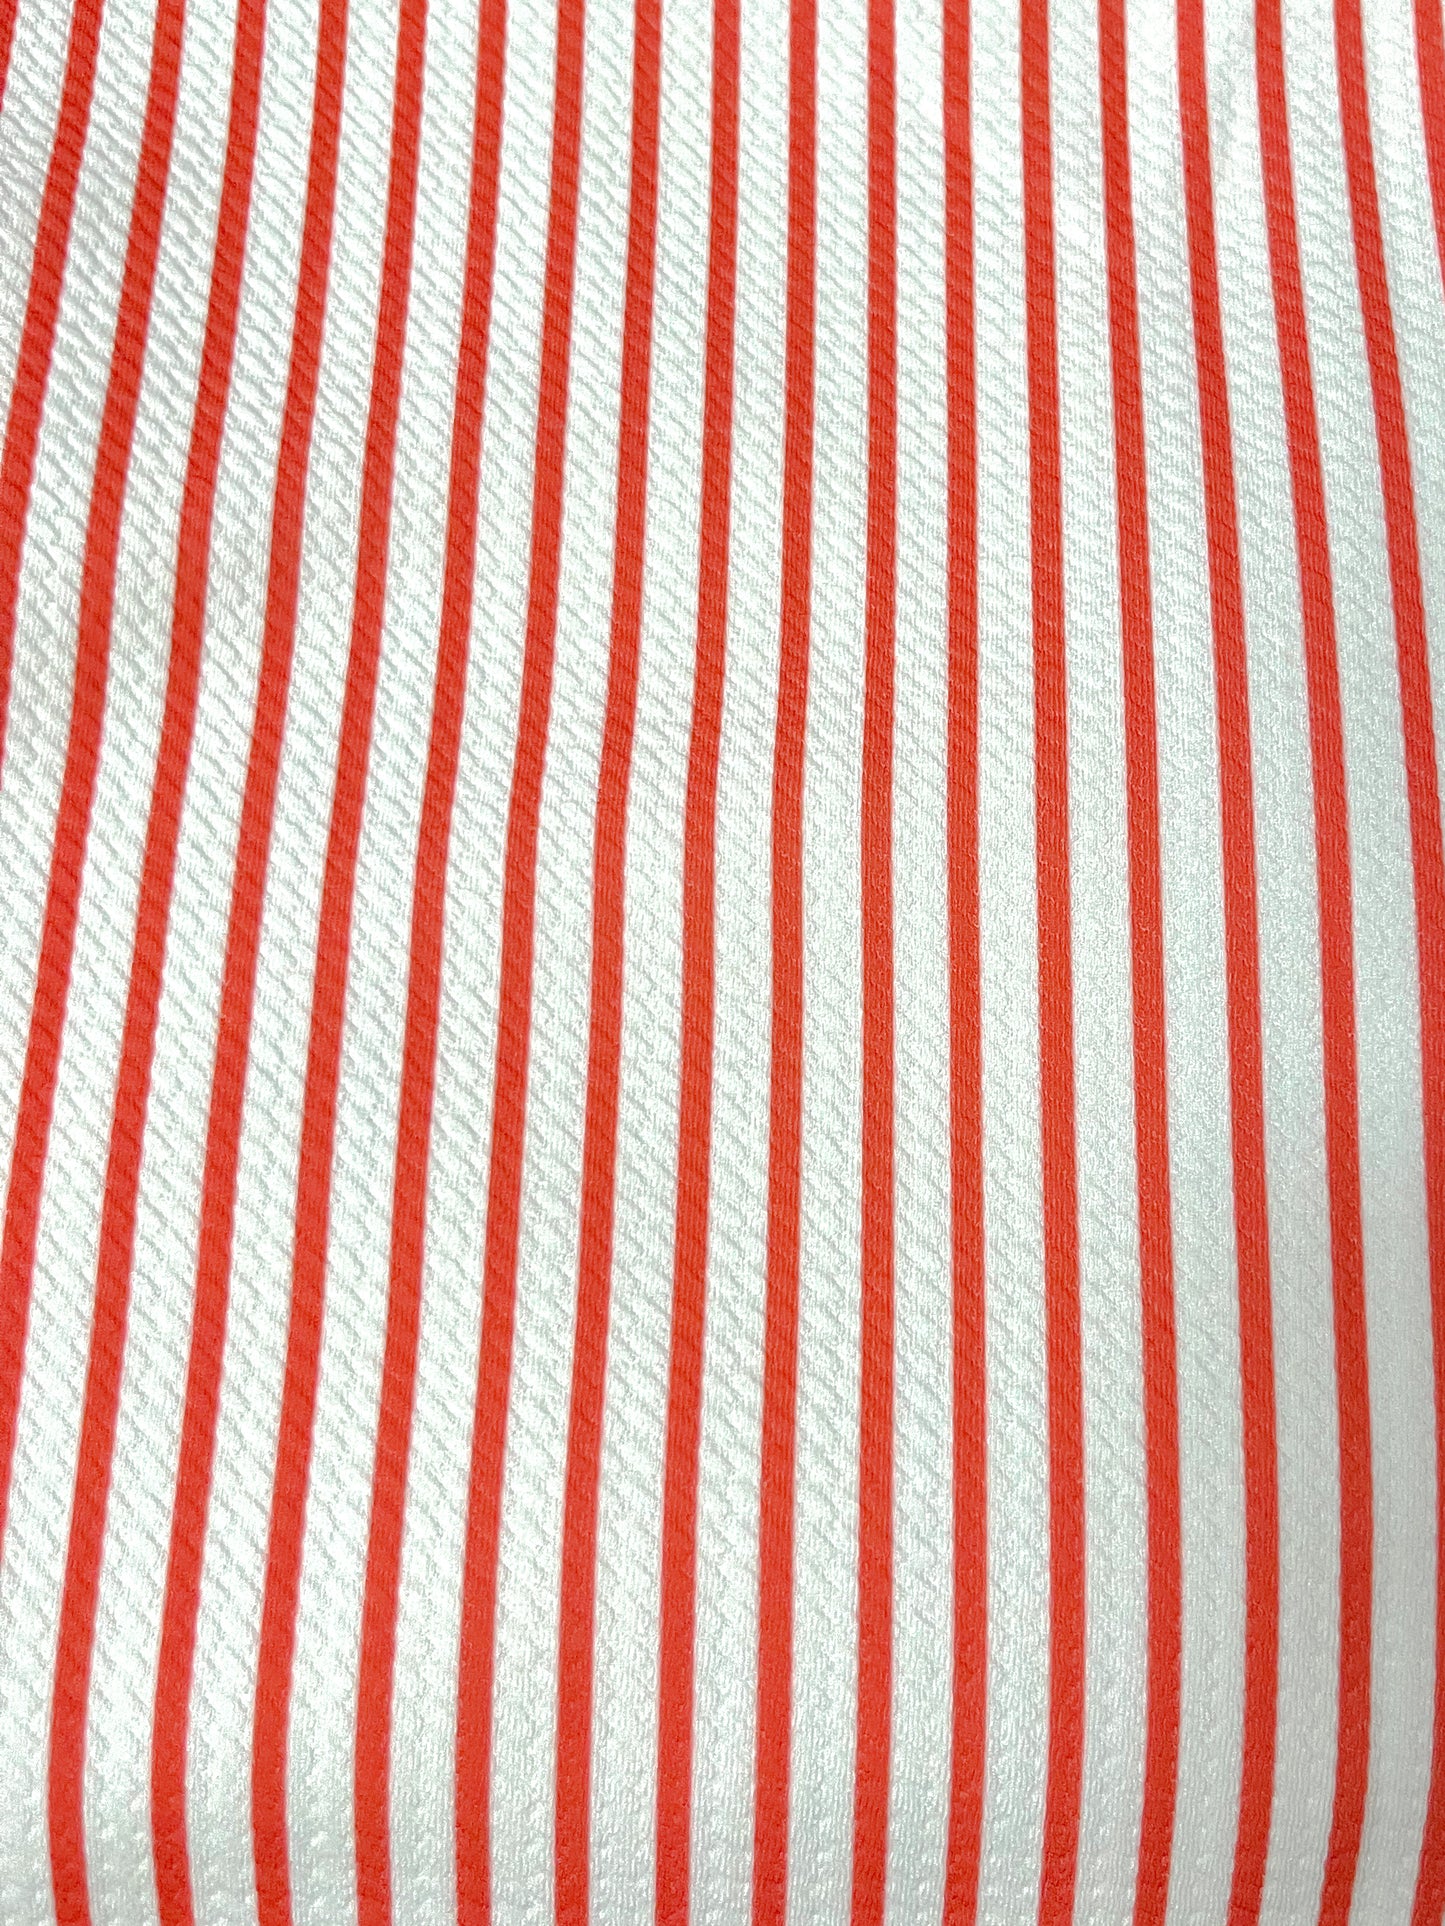 Red White Stripe